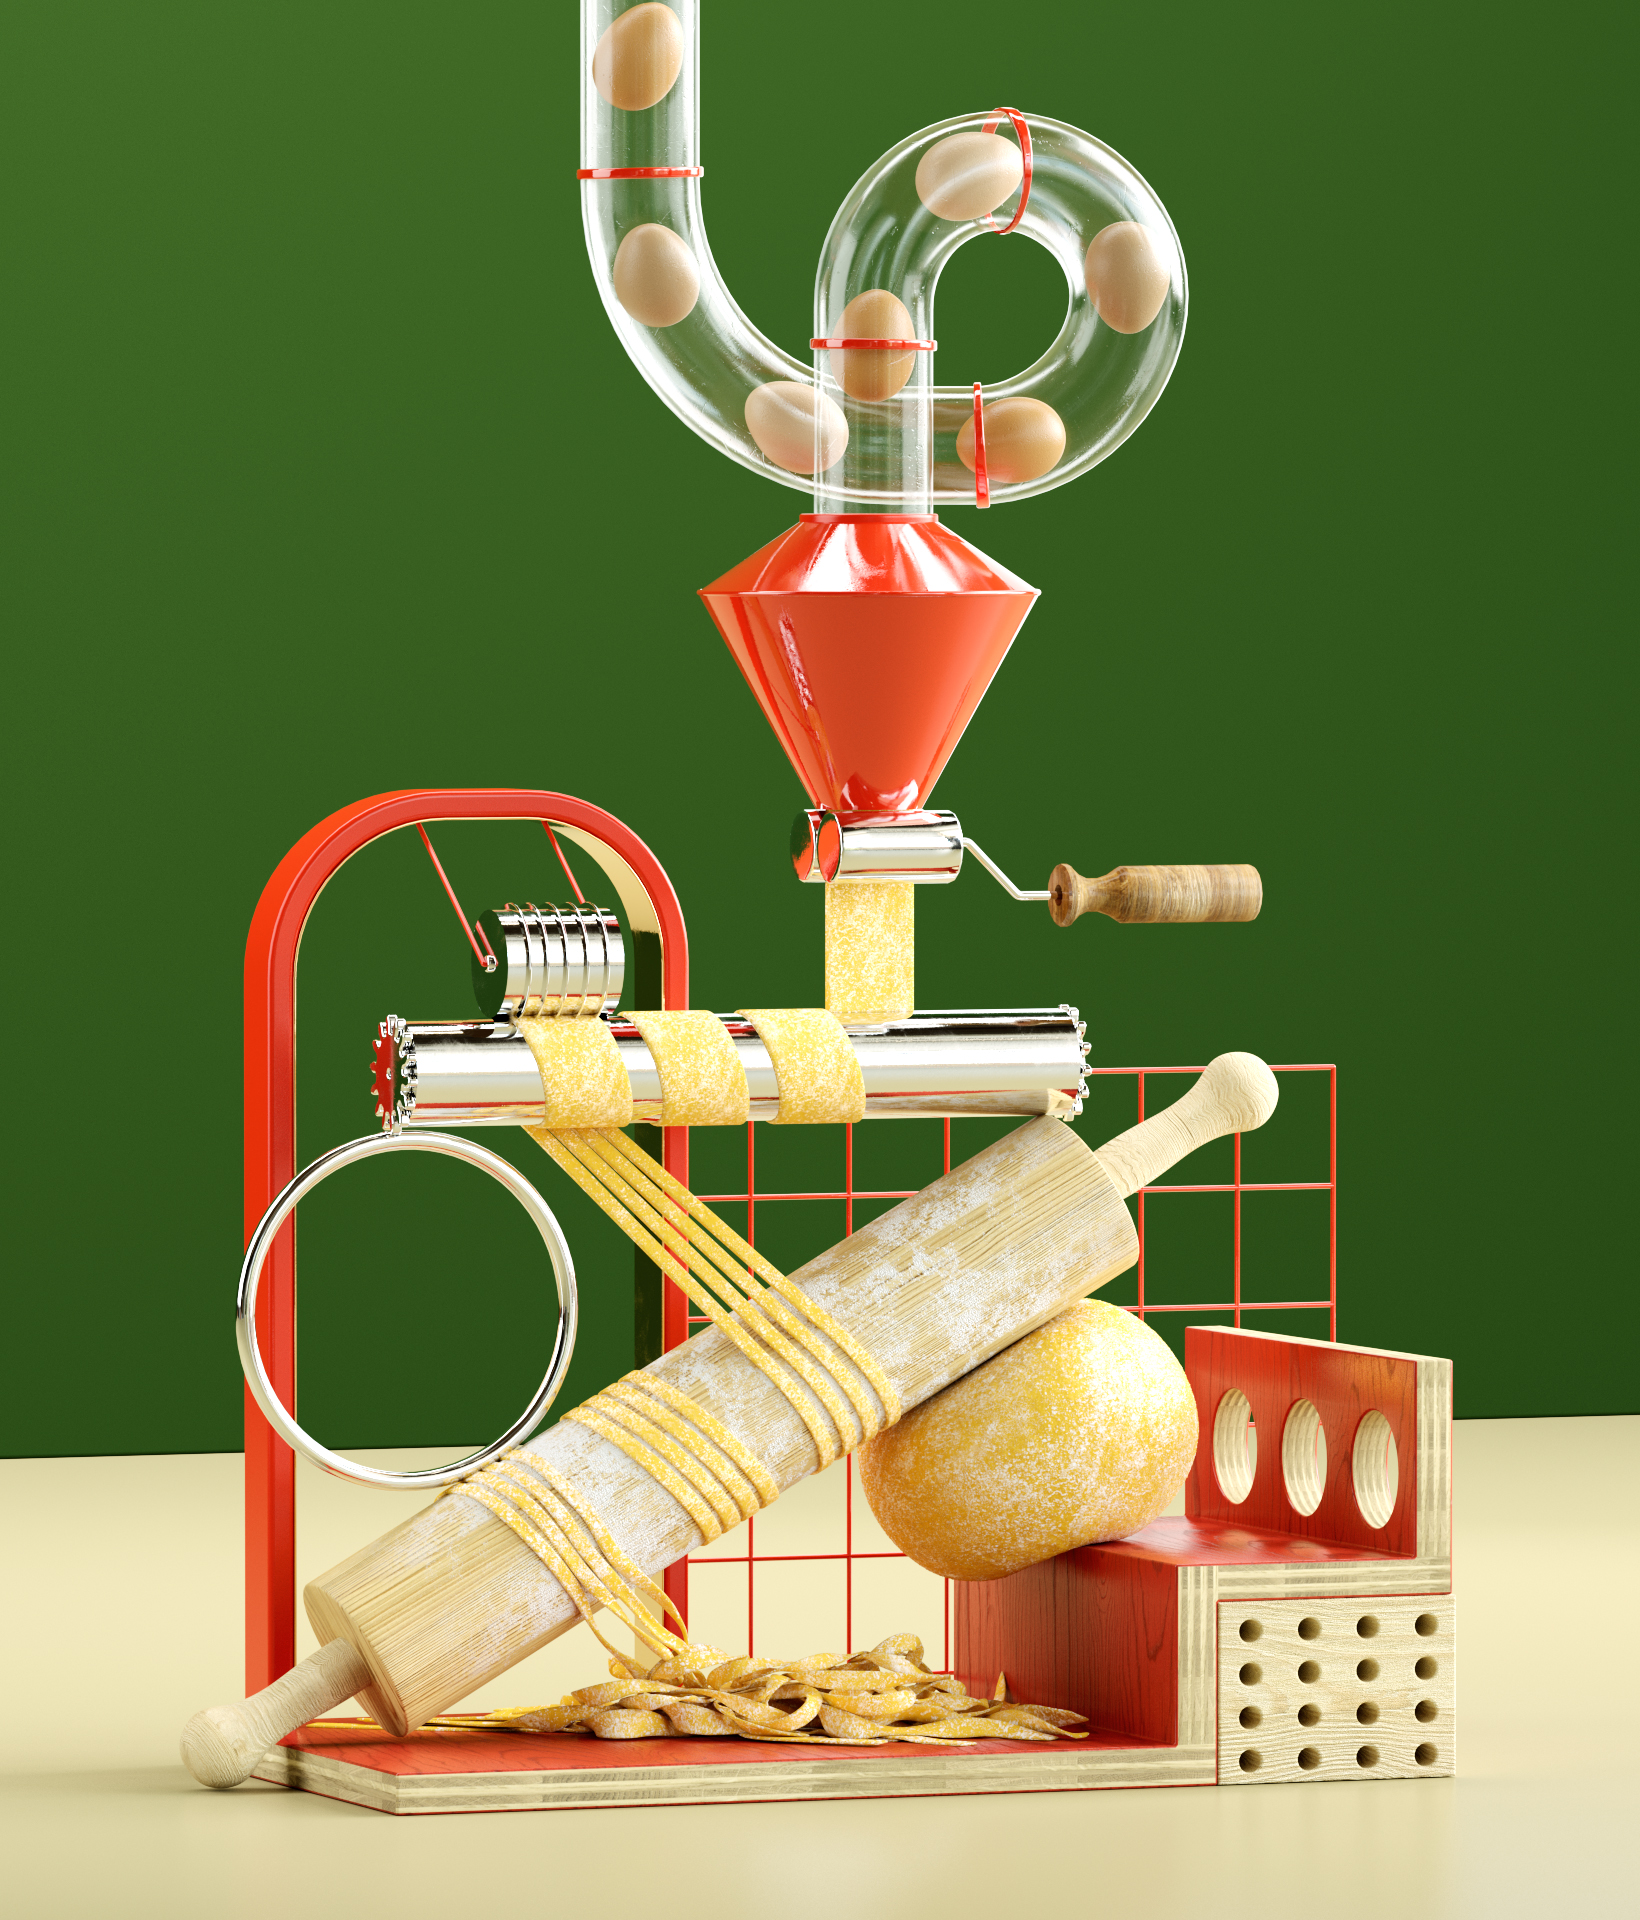 design-motion-3d-photography-octane-redshift-art-visual-animation-render-style-graphic-digital-federicopicci-imperia-pasta-egg-landorandfitch-agency-commercial-lasagna-spaghetti-ravioli-funny-laboratory-experiment-cut-soft-wood